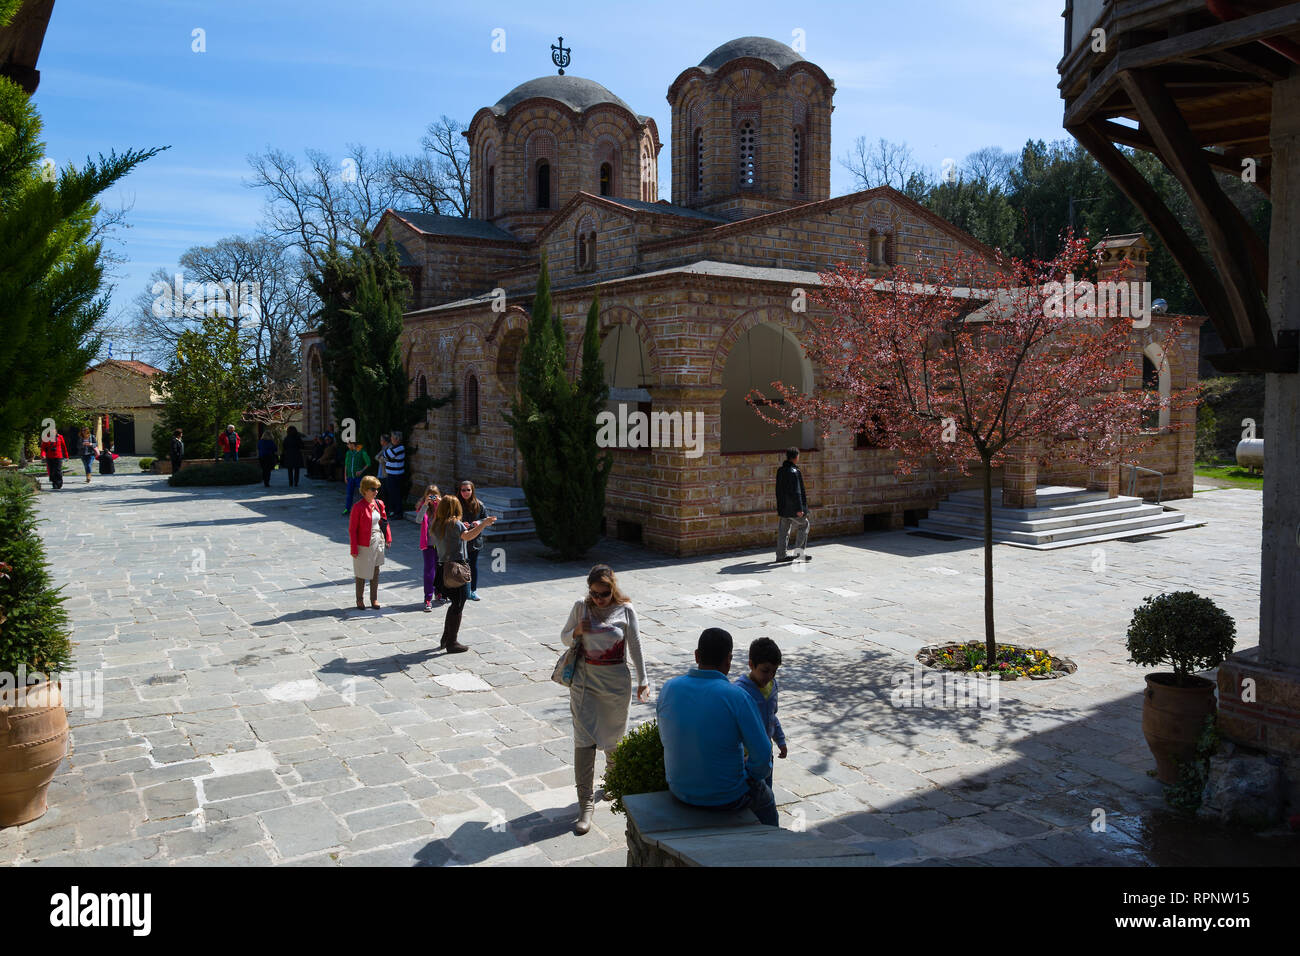 LITOCHORO, GREECE - APRIL 12, 2015: Monastery of Saint Dionysius of Mount Olympus, Litochoro, Greece. Stock Photo